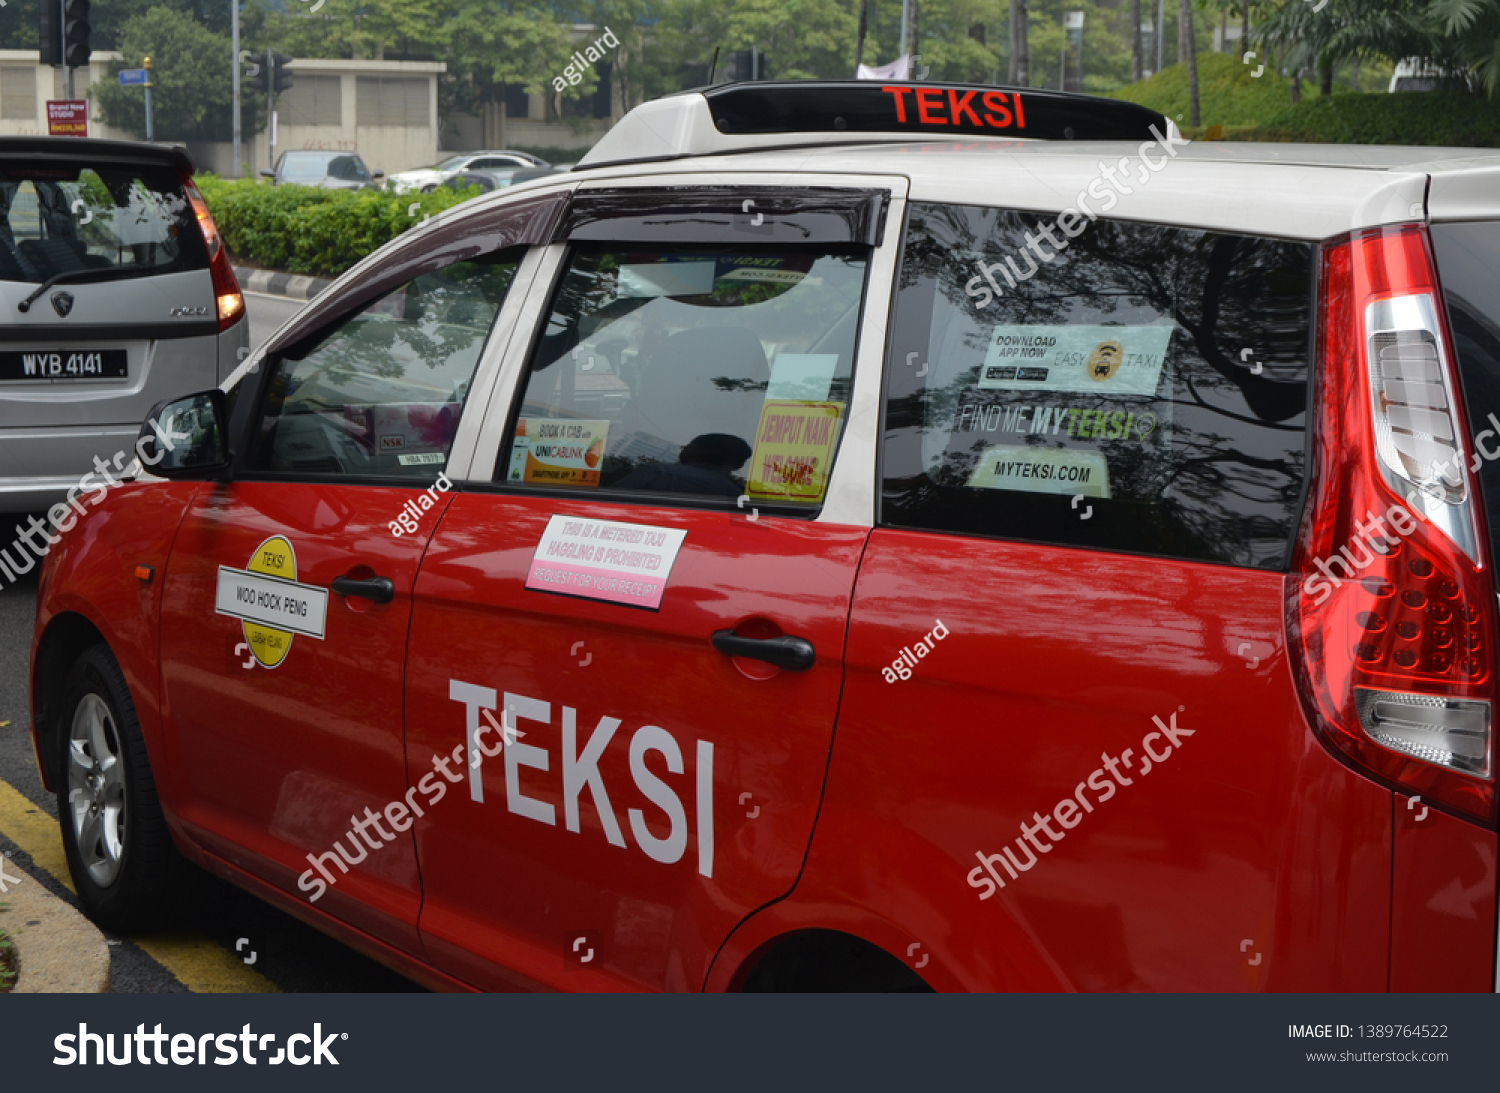 Malaysian Taxi Corporation Teksi Red White Stock Photo Edit Now 1389764522